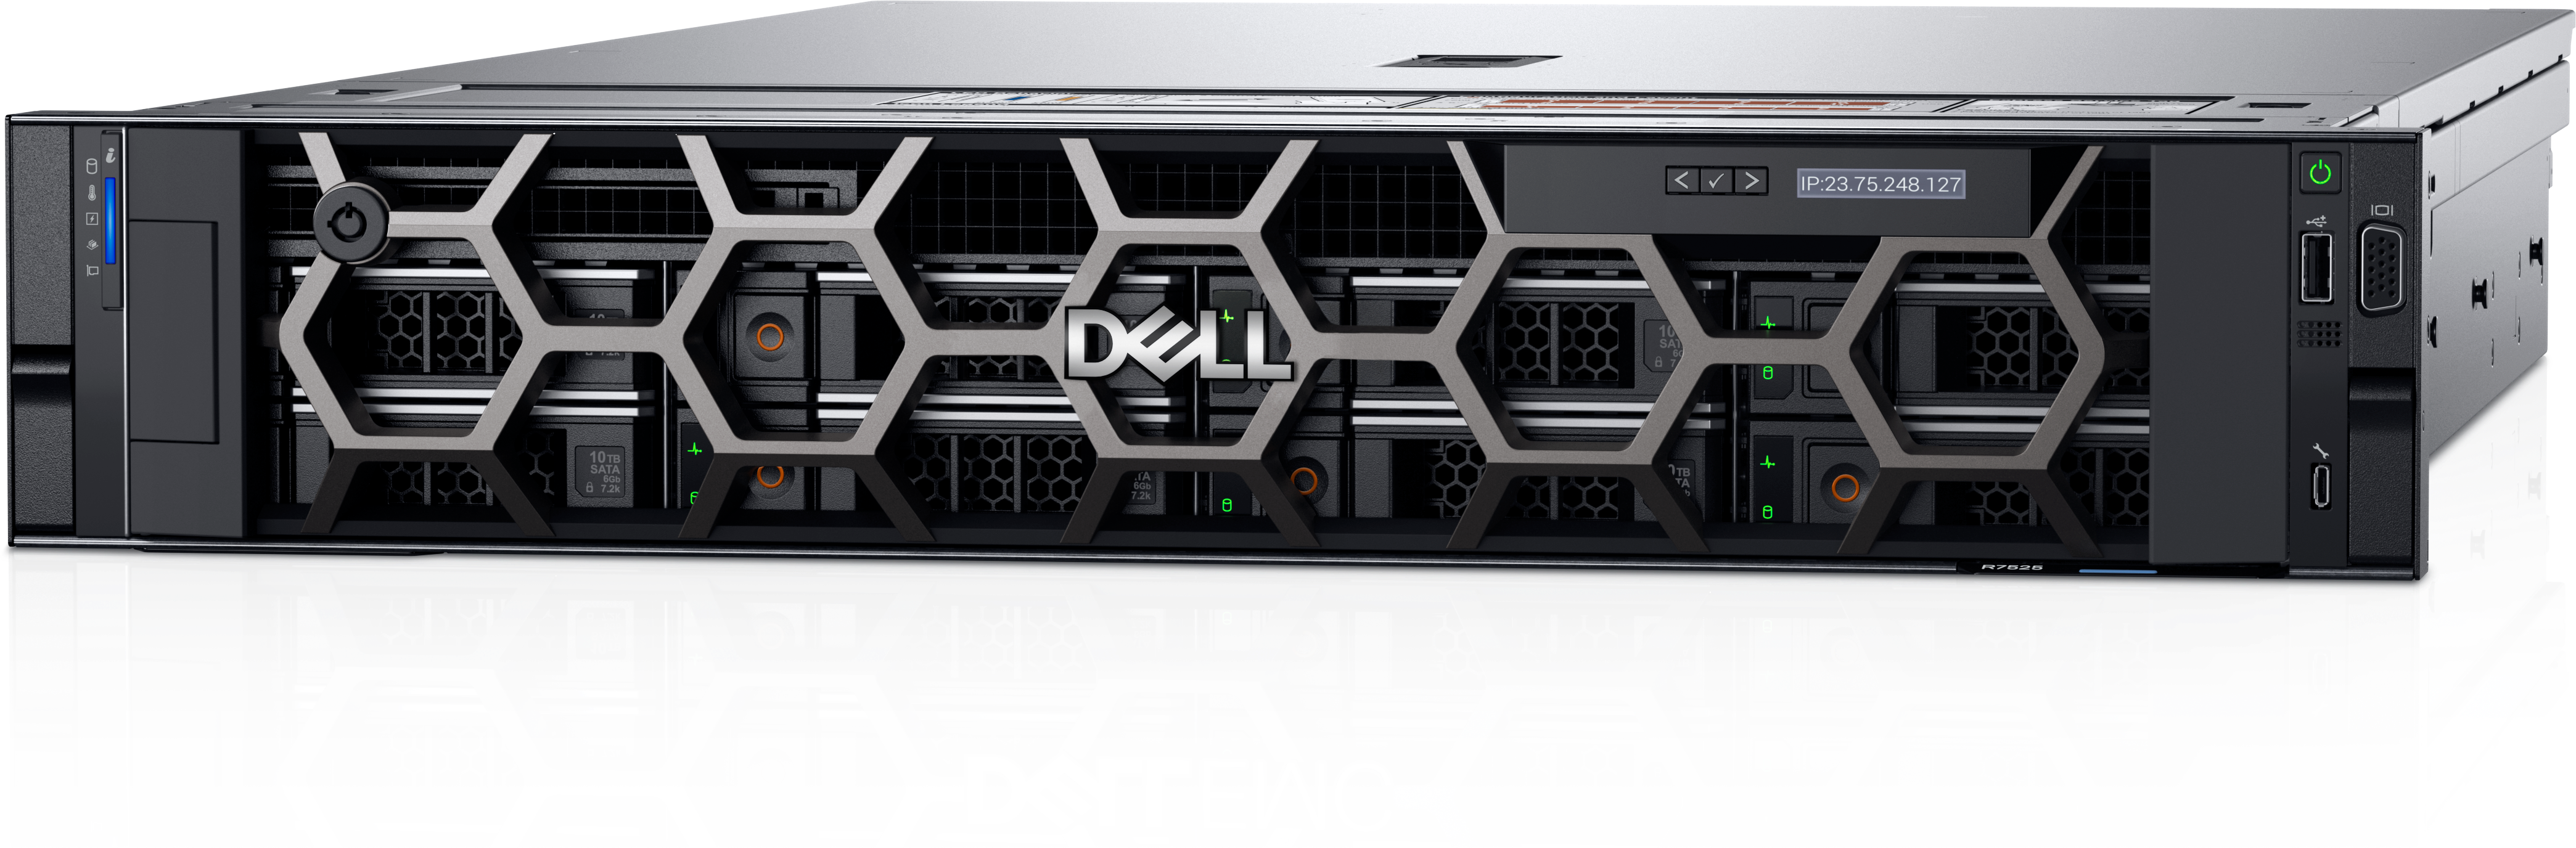 Dell PowerEdge R7525 Rack Server- W/ AMD EPYC 7313 Processor - 16GB